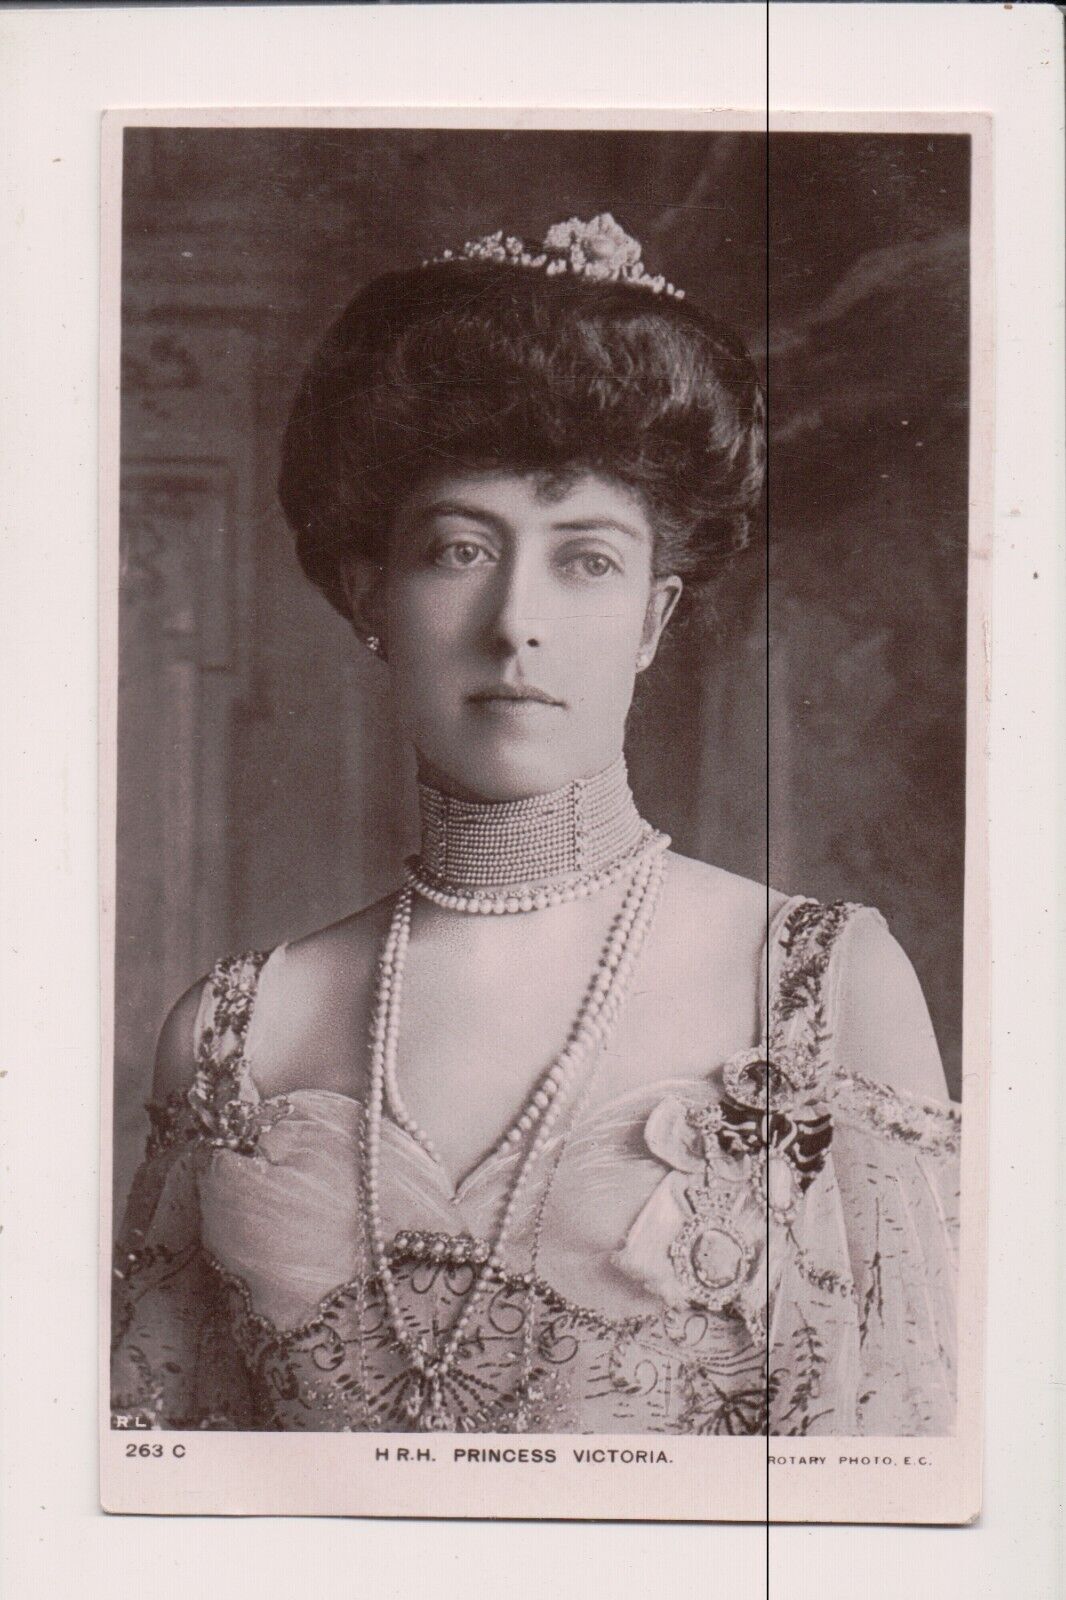 Vintage Postcard  Prince Arthur of Connaught & Princess Alexandra